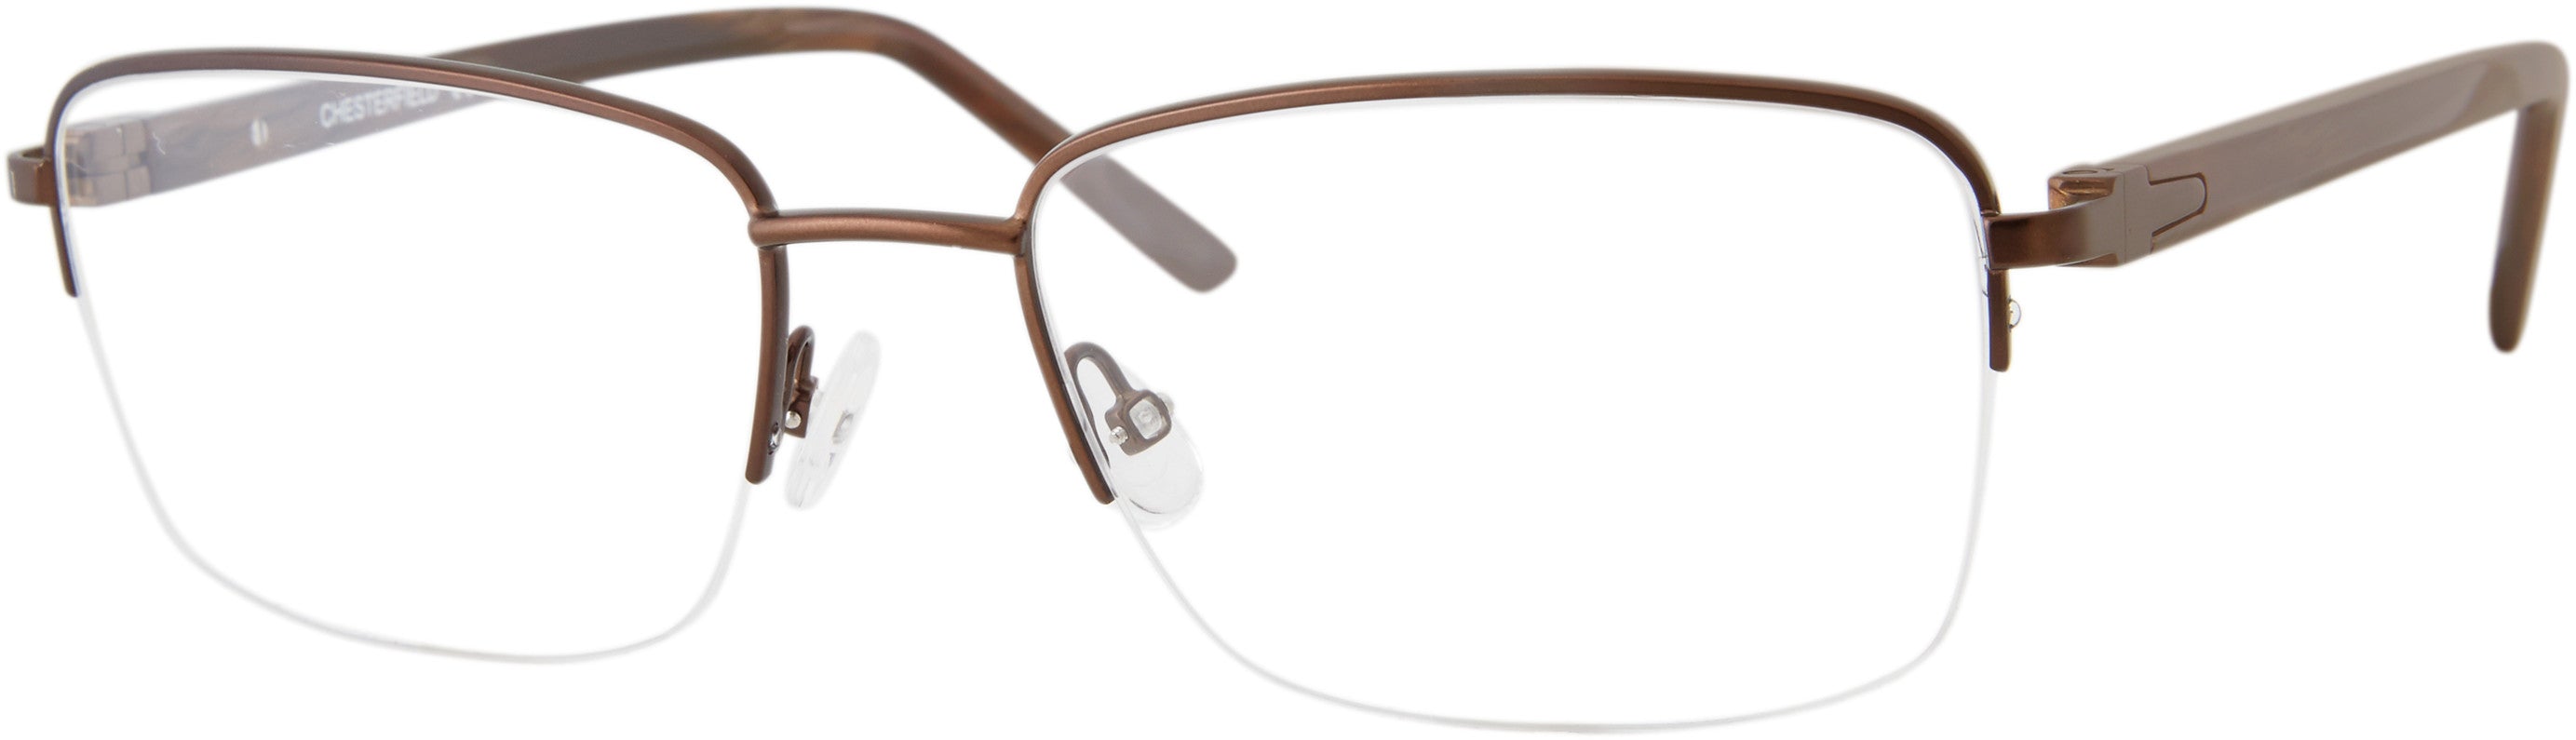  Chesterfield 79XL Rectangular Eyeglasses 009Q-009Q  Brown (00 Demo Lens)